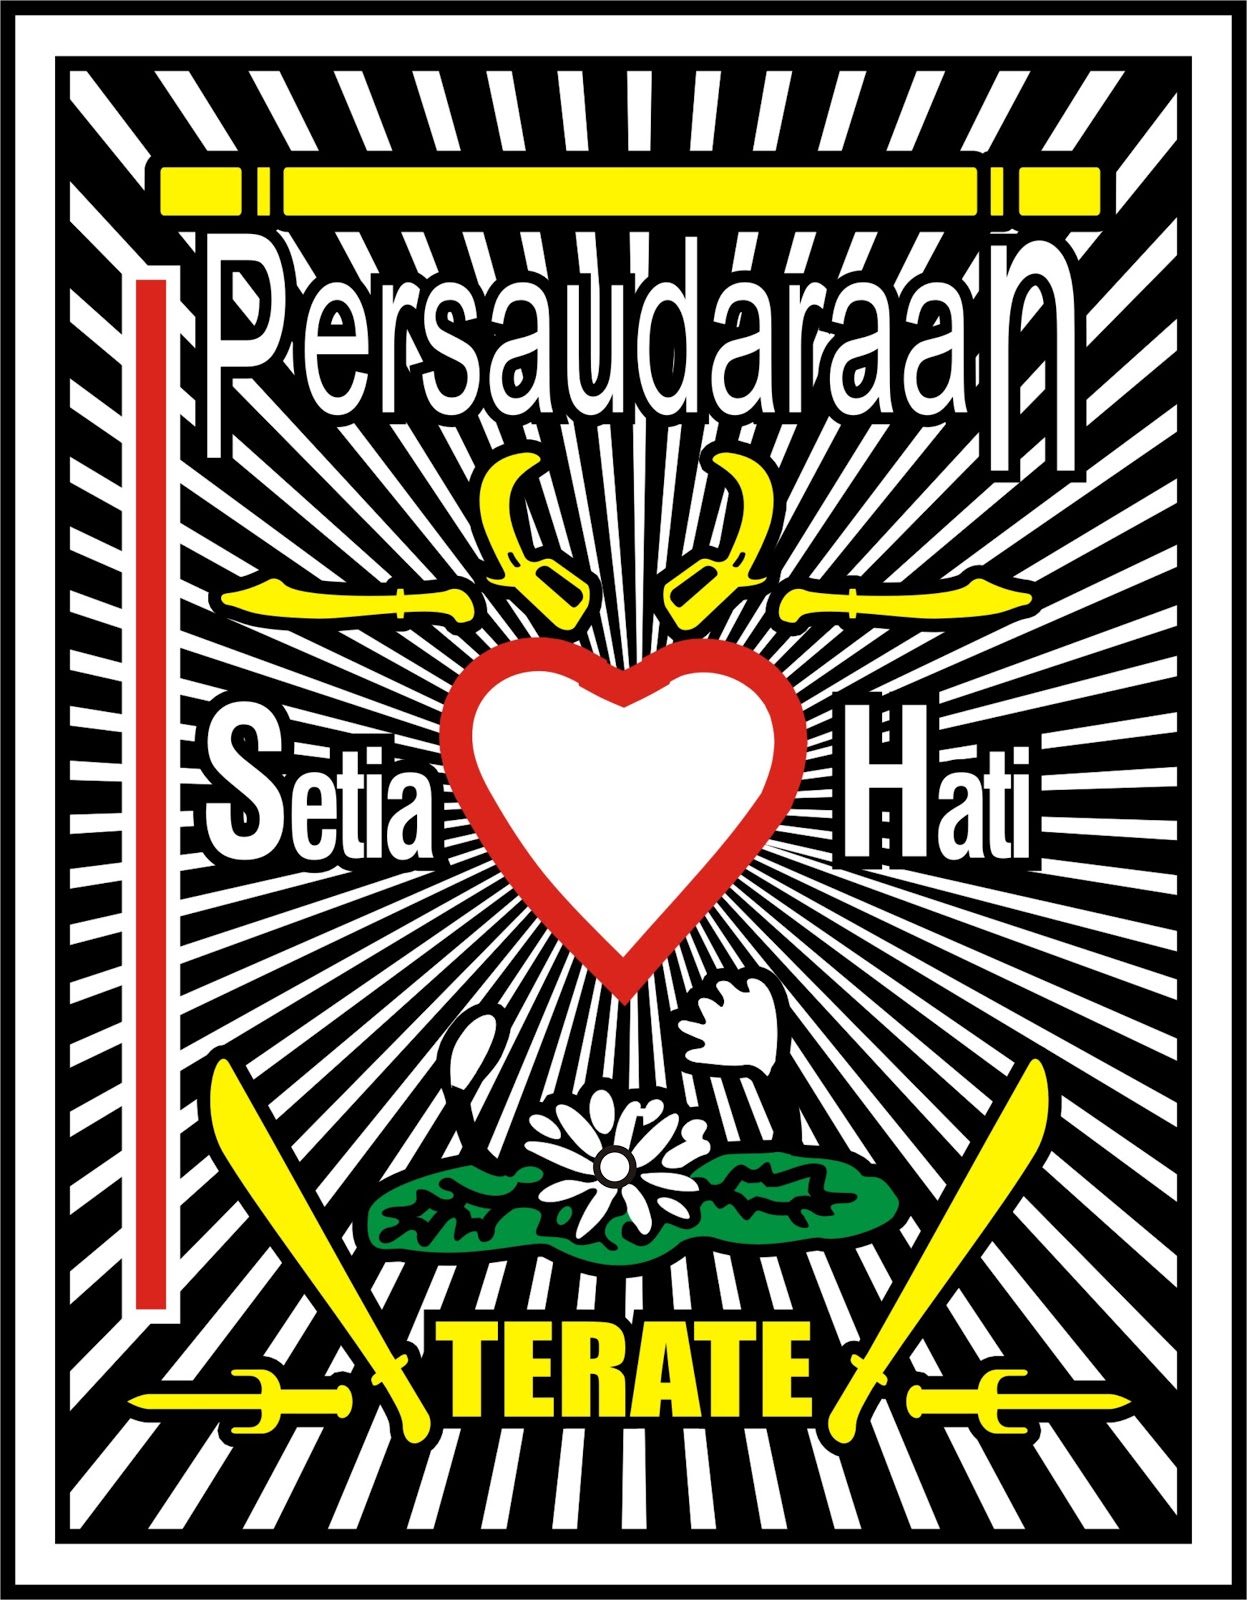 Logo Pencak Silat - Pencak Silat Indonesia